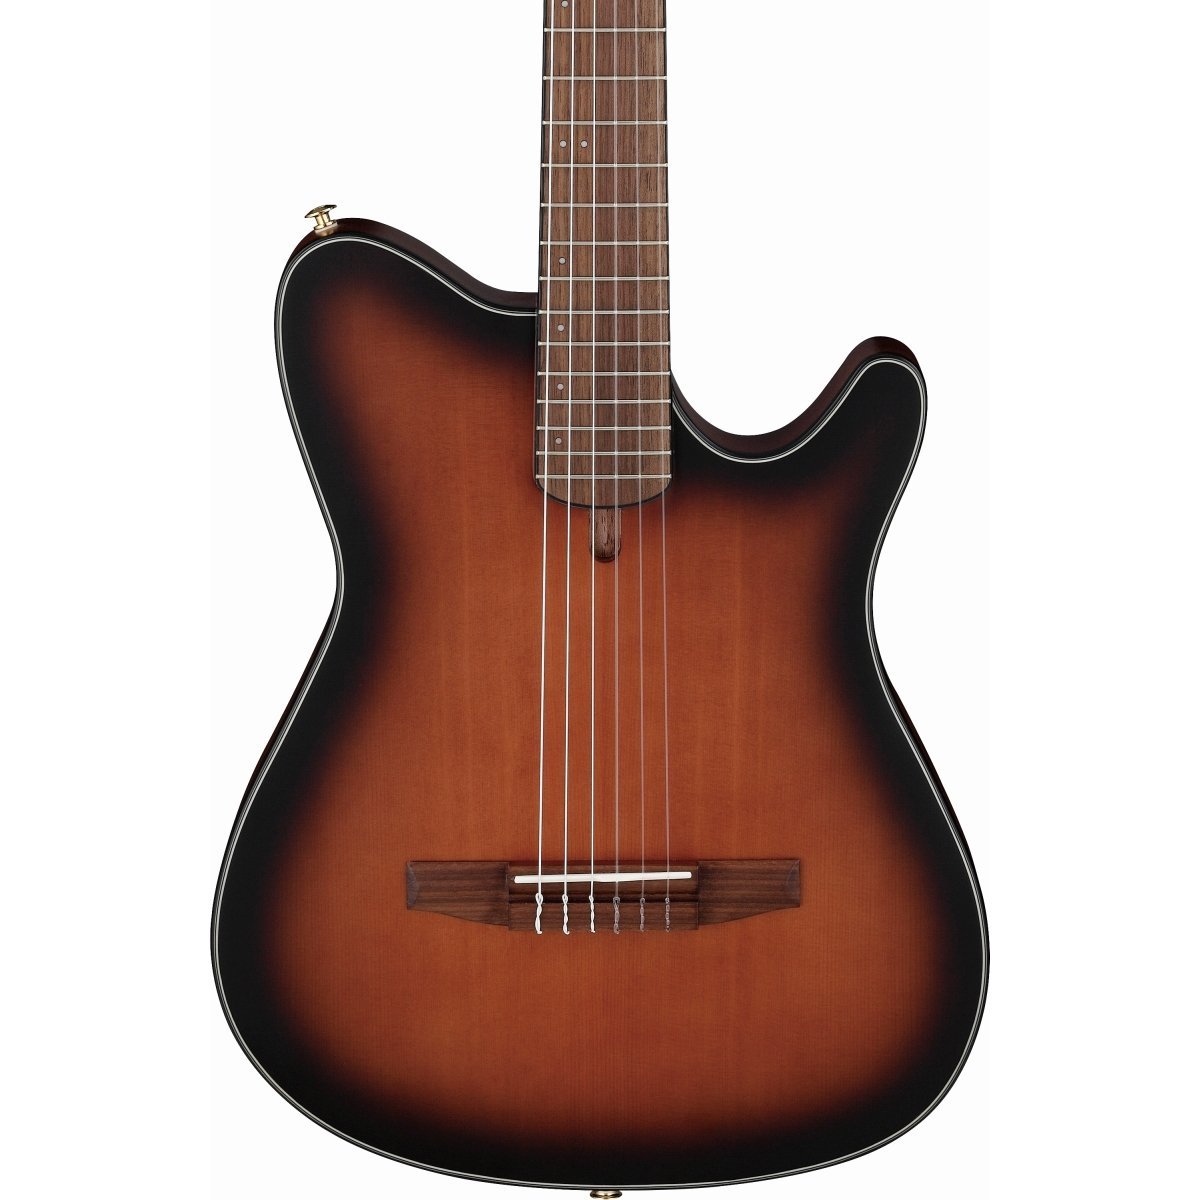 Ibanez ”Nylon Electric Guitar” FRH10N-BSF (Brown Sunburst Flat